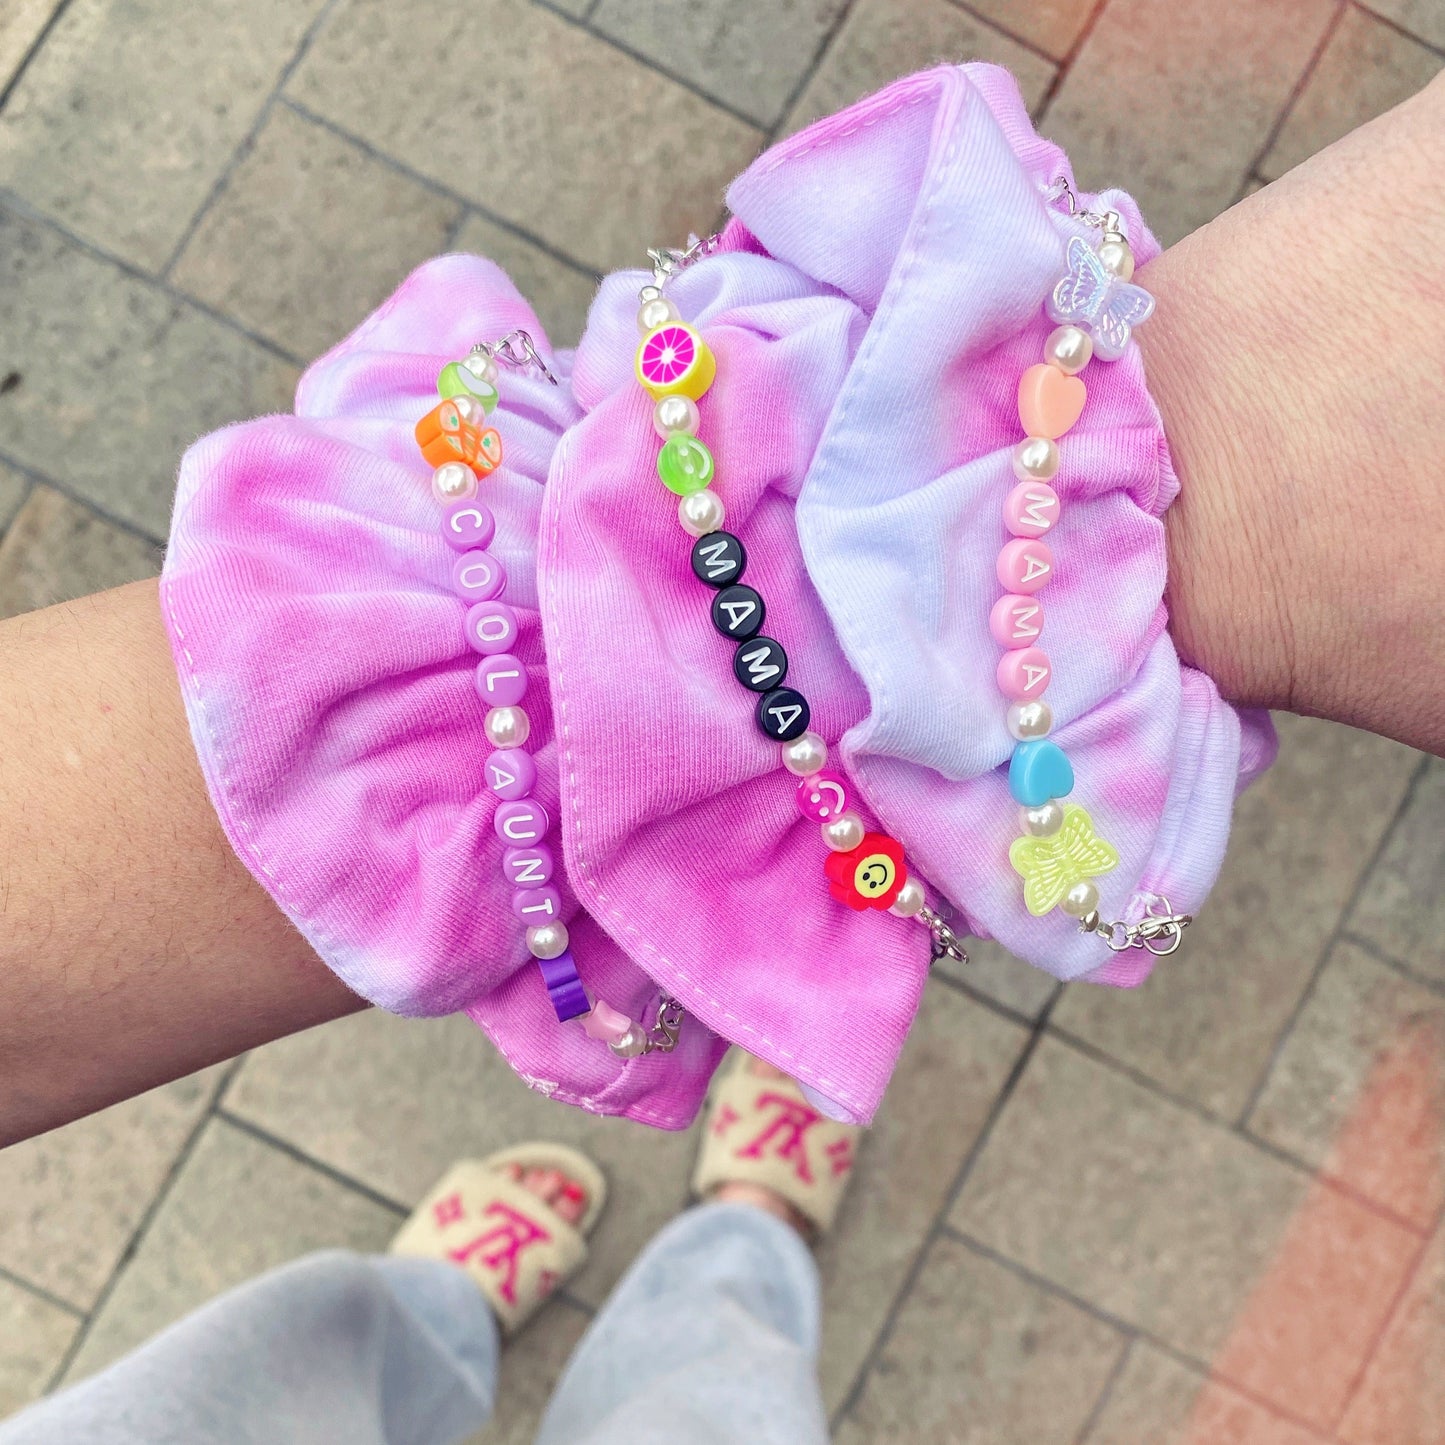 MAMA SCRUNCHIE ♡ tie-dye scrunchie with mama beads by Aura Sugar Co.